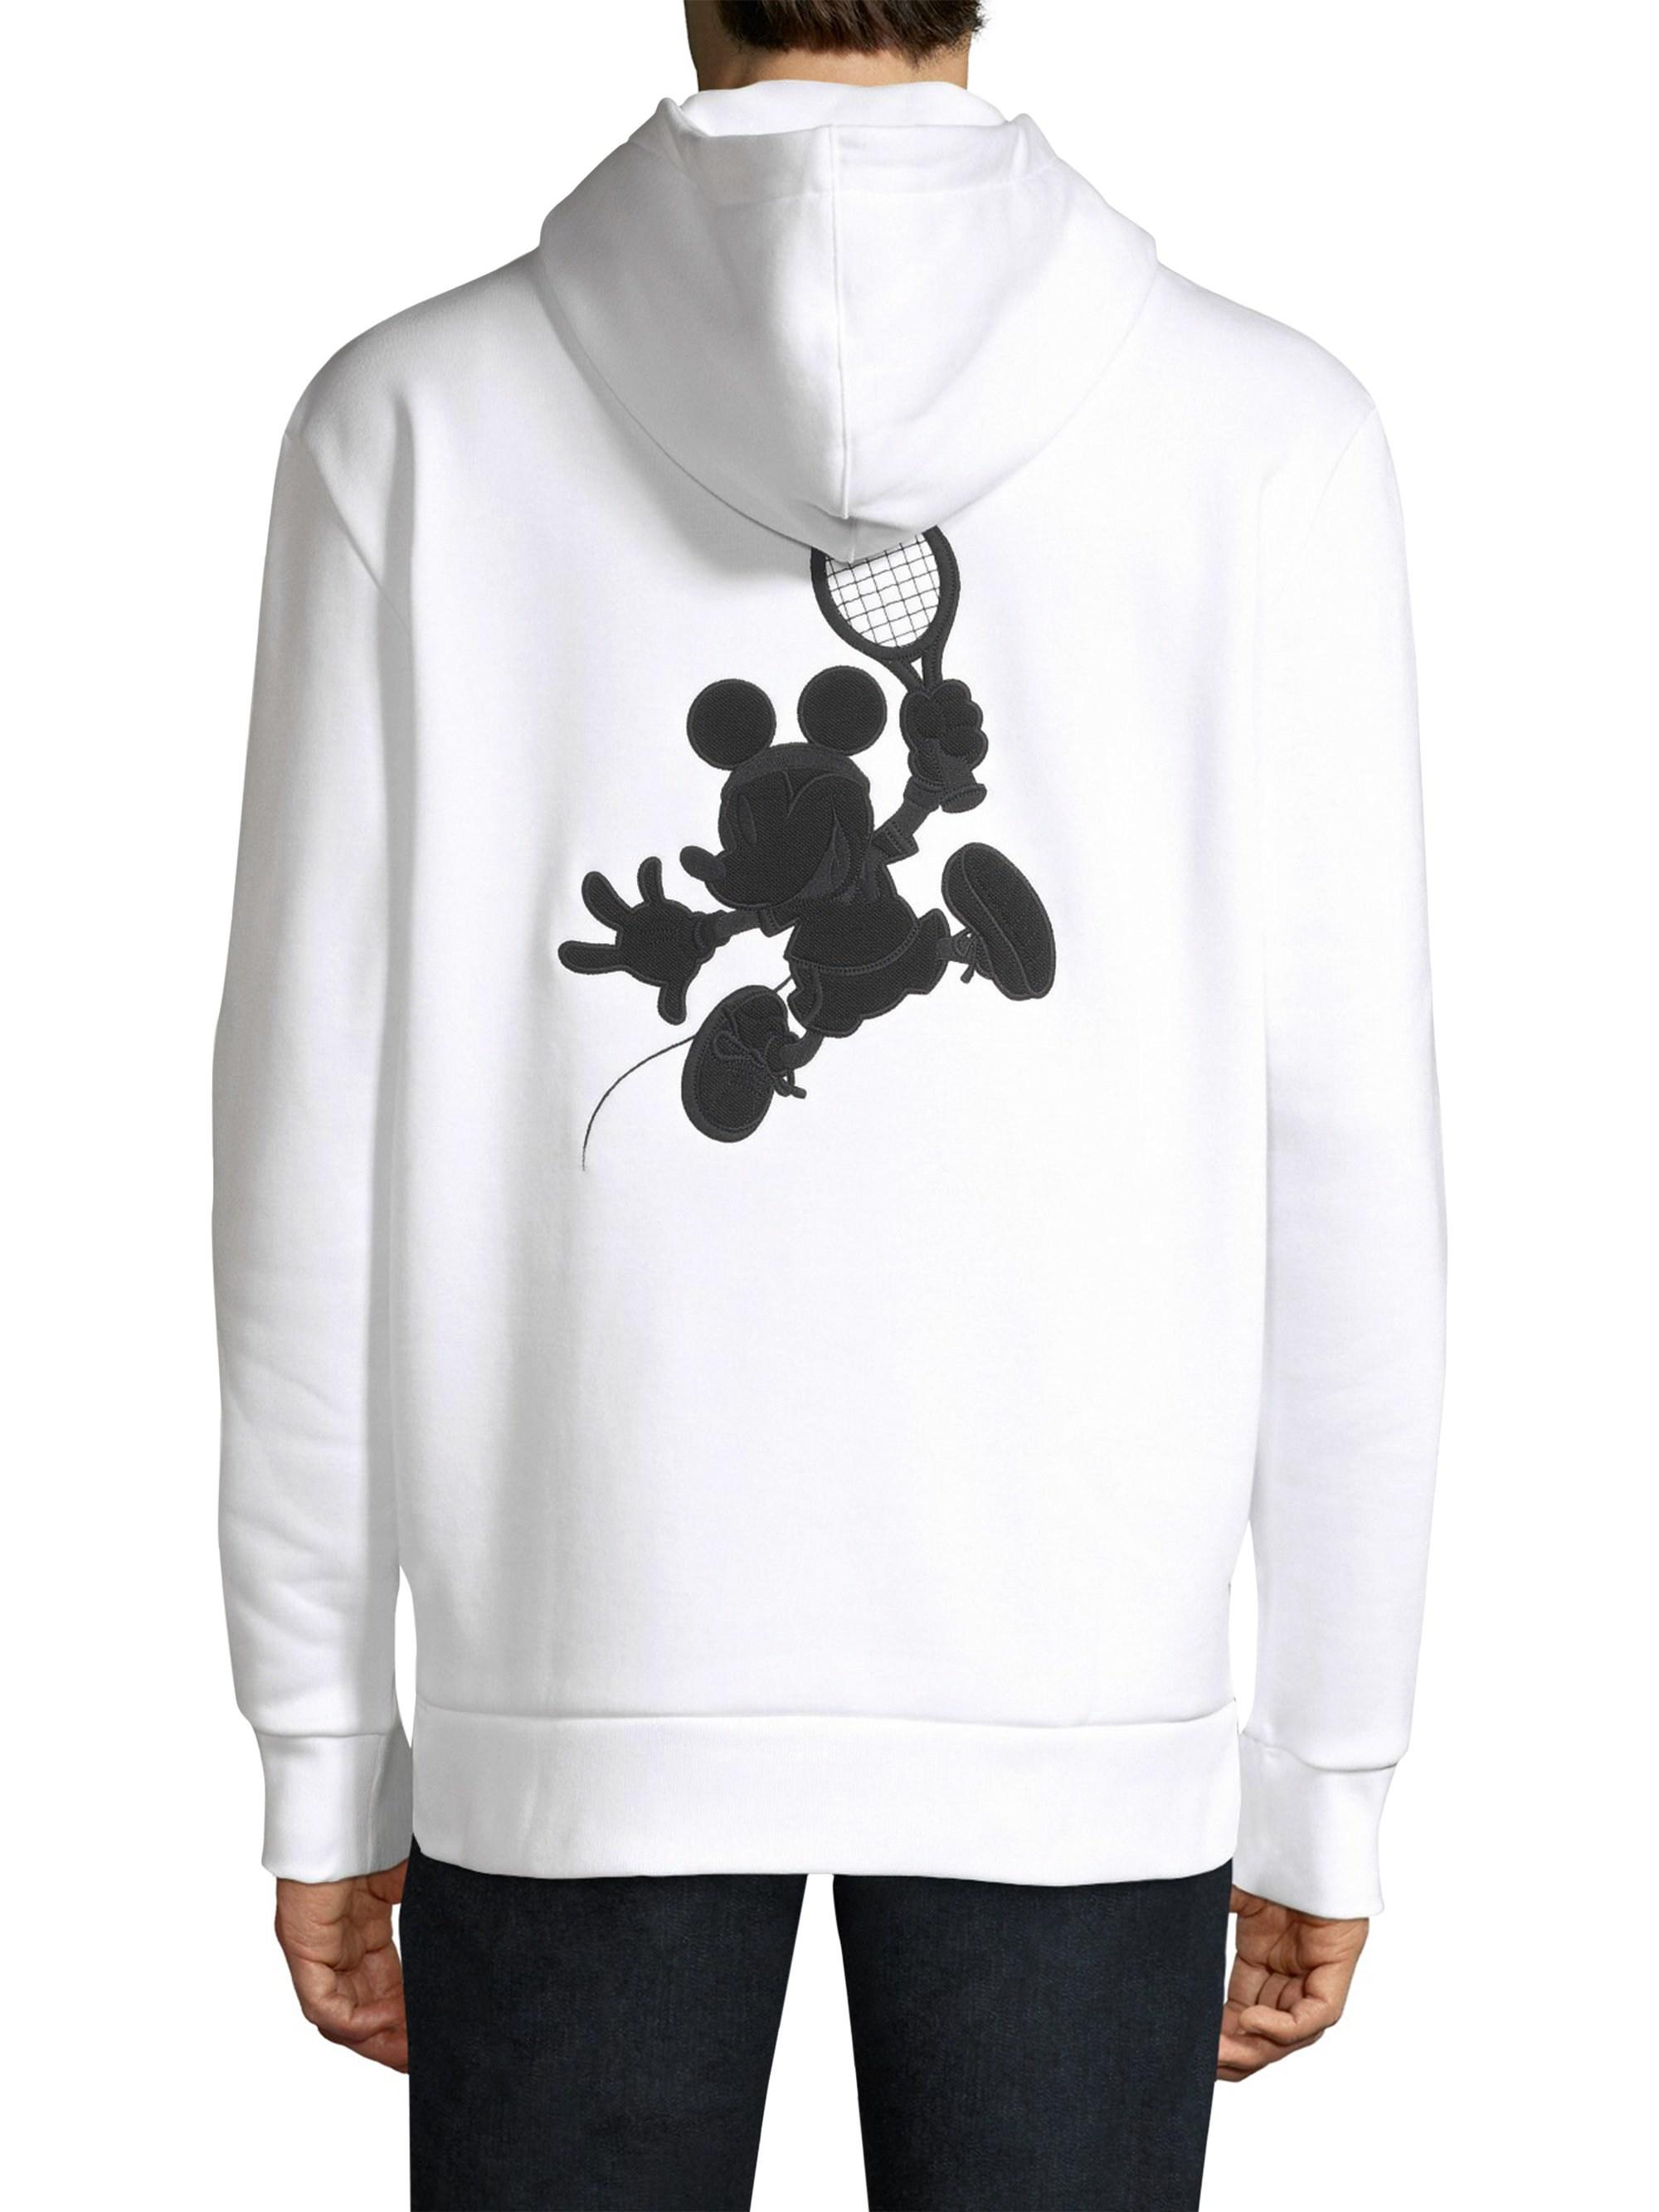 tennis mickey mouse hoodie